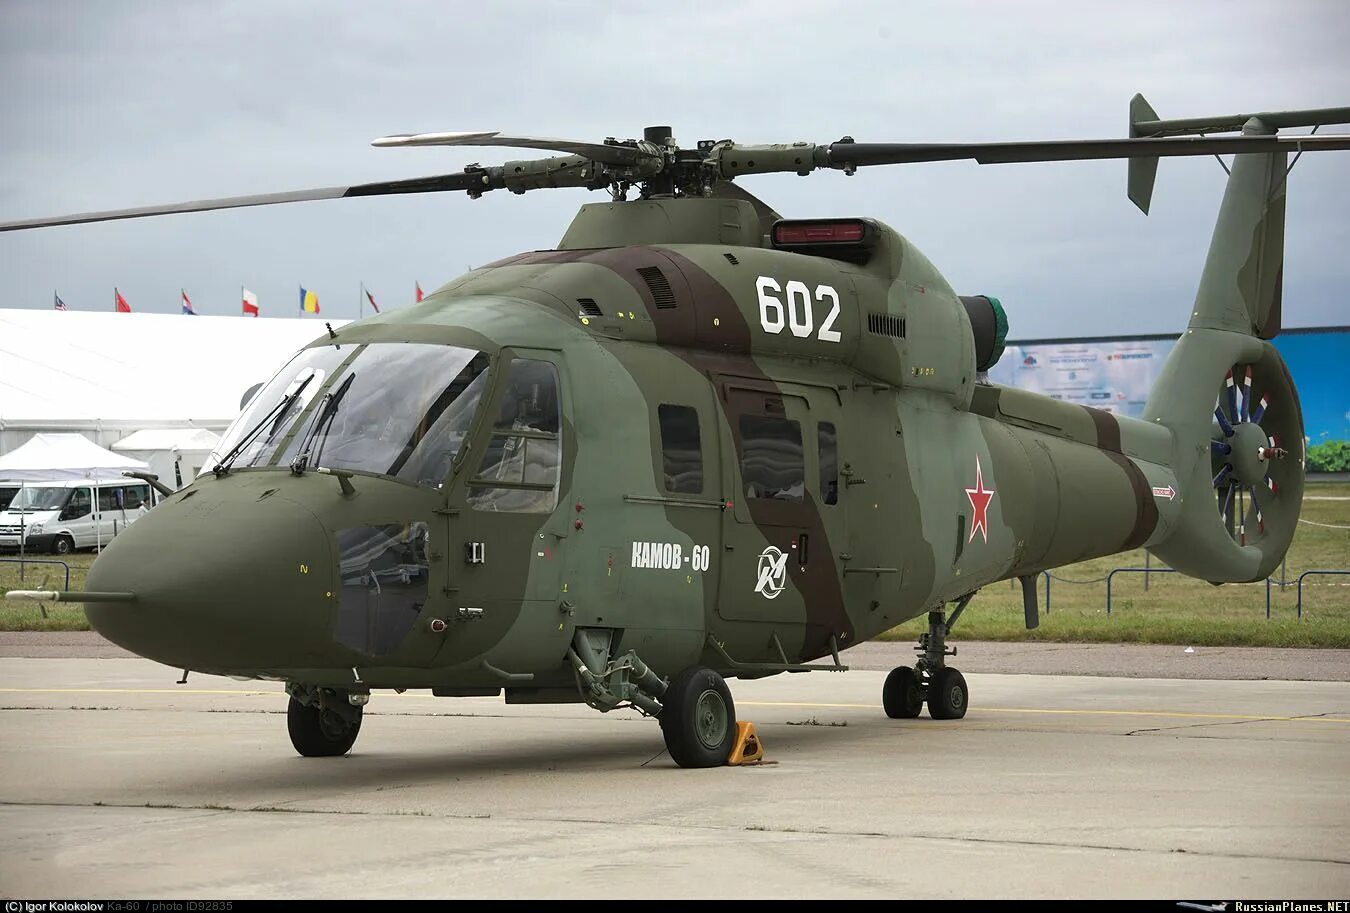 Военный вертолет. Ка-60 Касатка. Ка-60 вертолёт. Ми-60 МАИ. Военные вертолеты РФ.